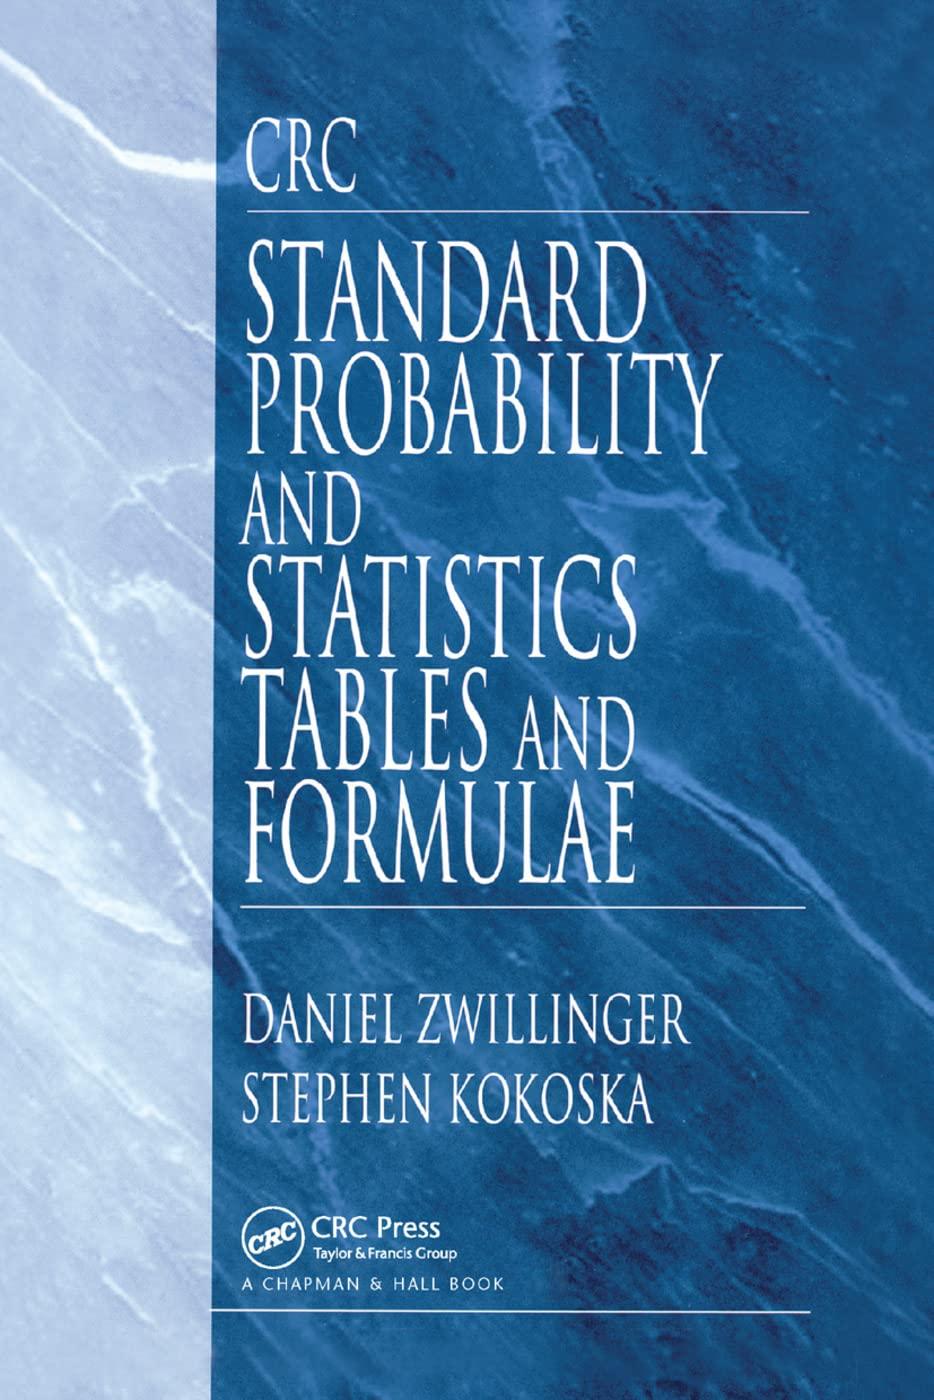 crc standard probability and statistics tables and formulae 1st edition daniel zwillinger, stephen kokoska